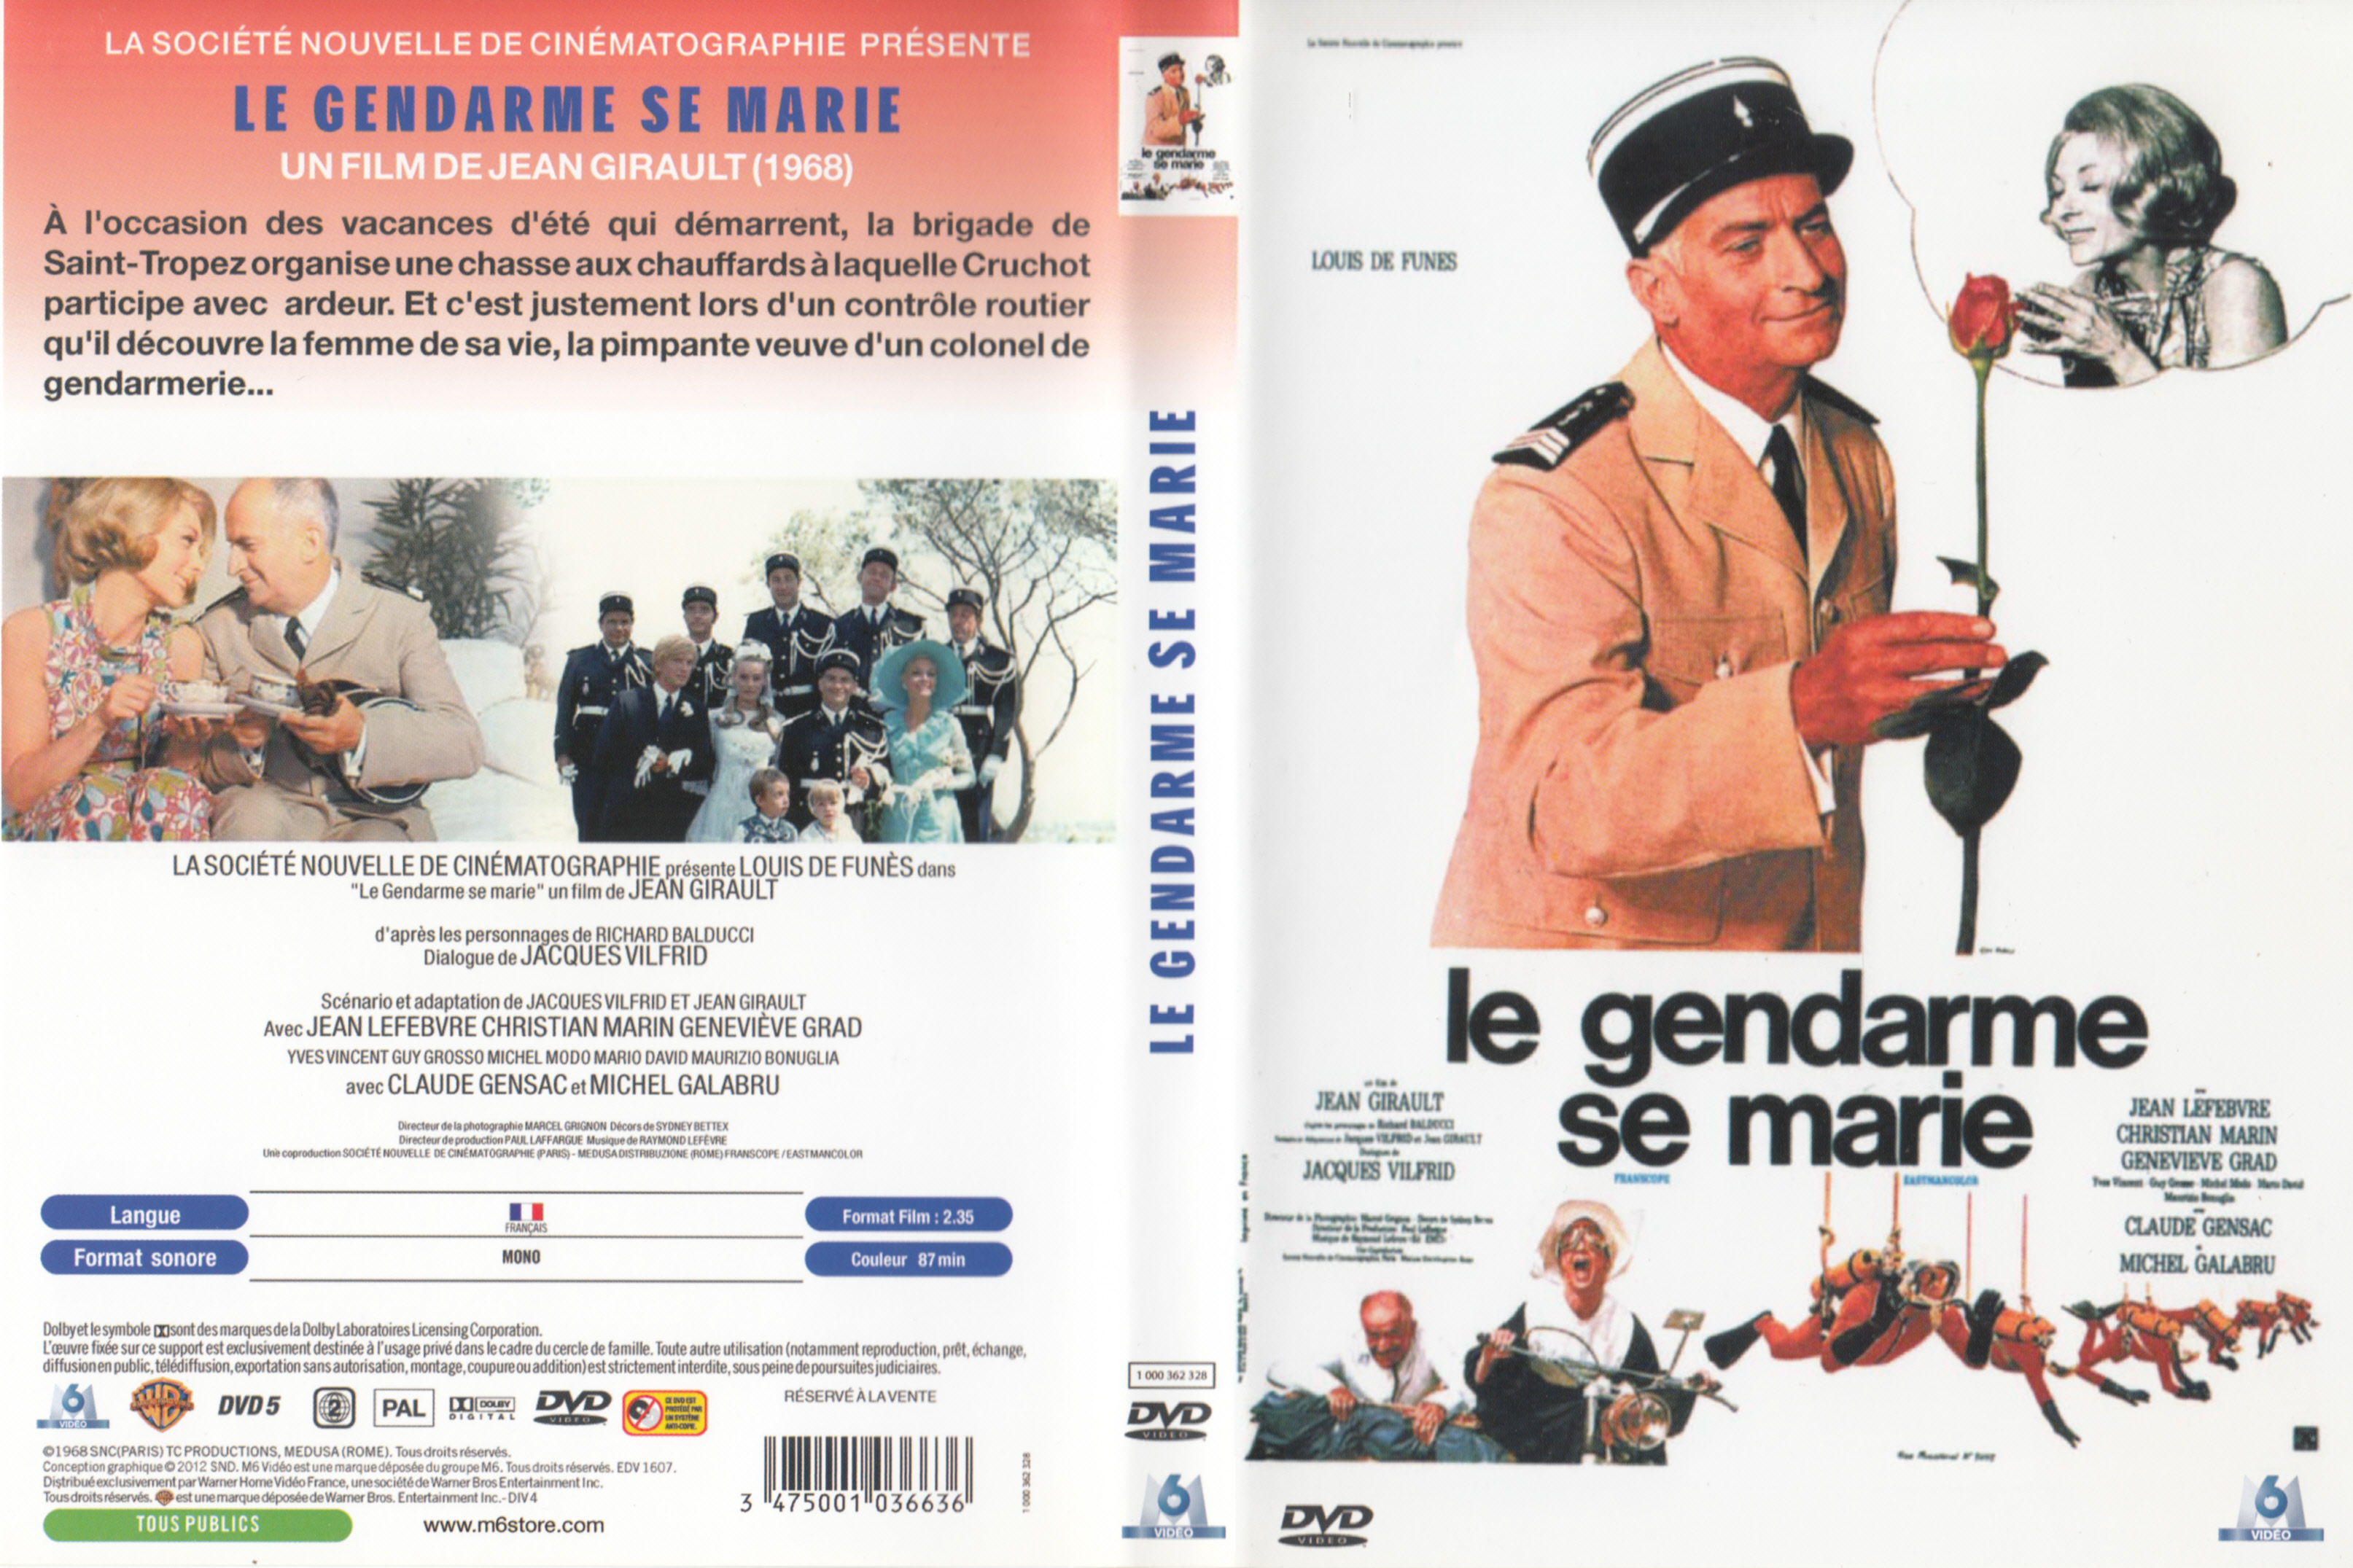 Jaquette DVD Le gendarme se marie v4